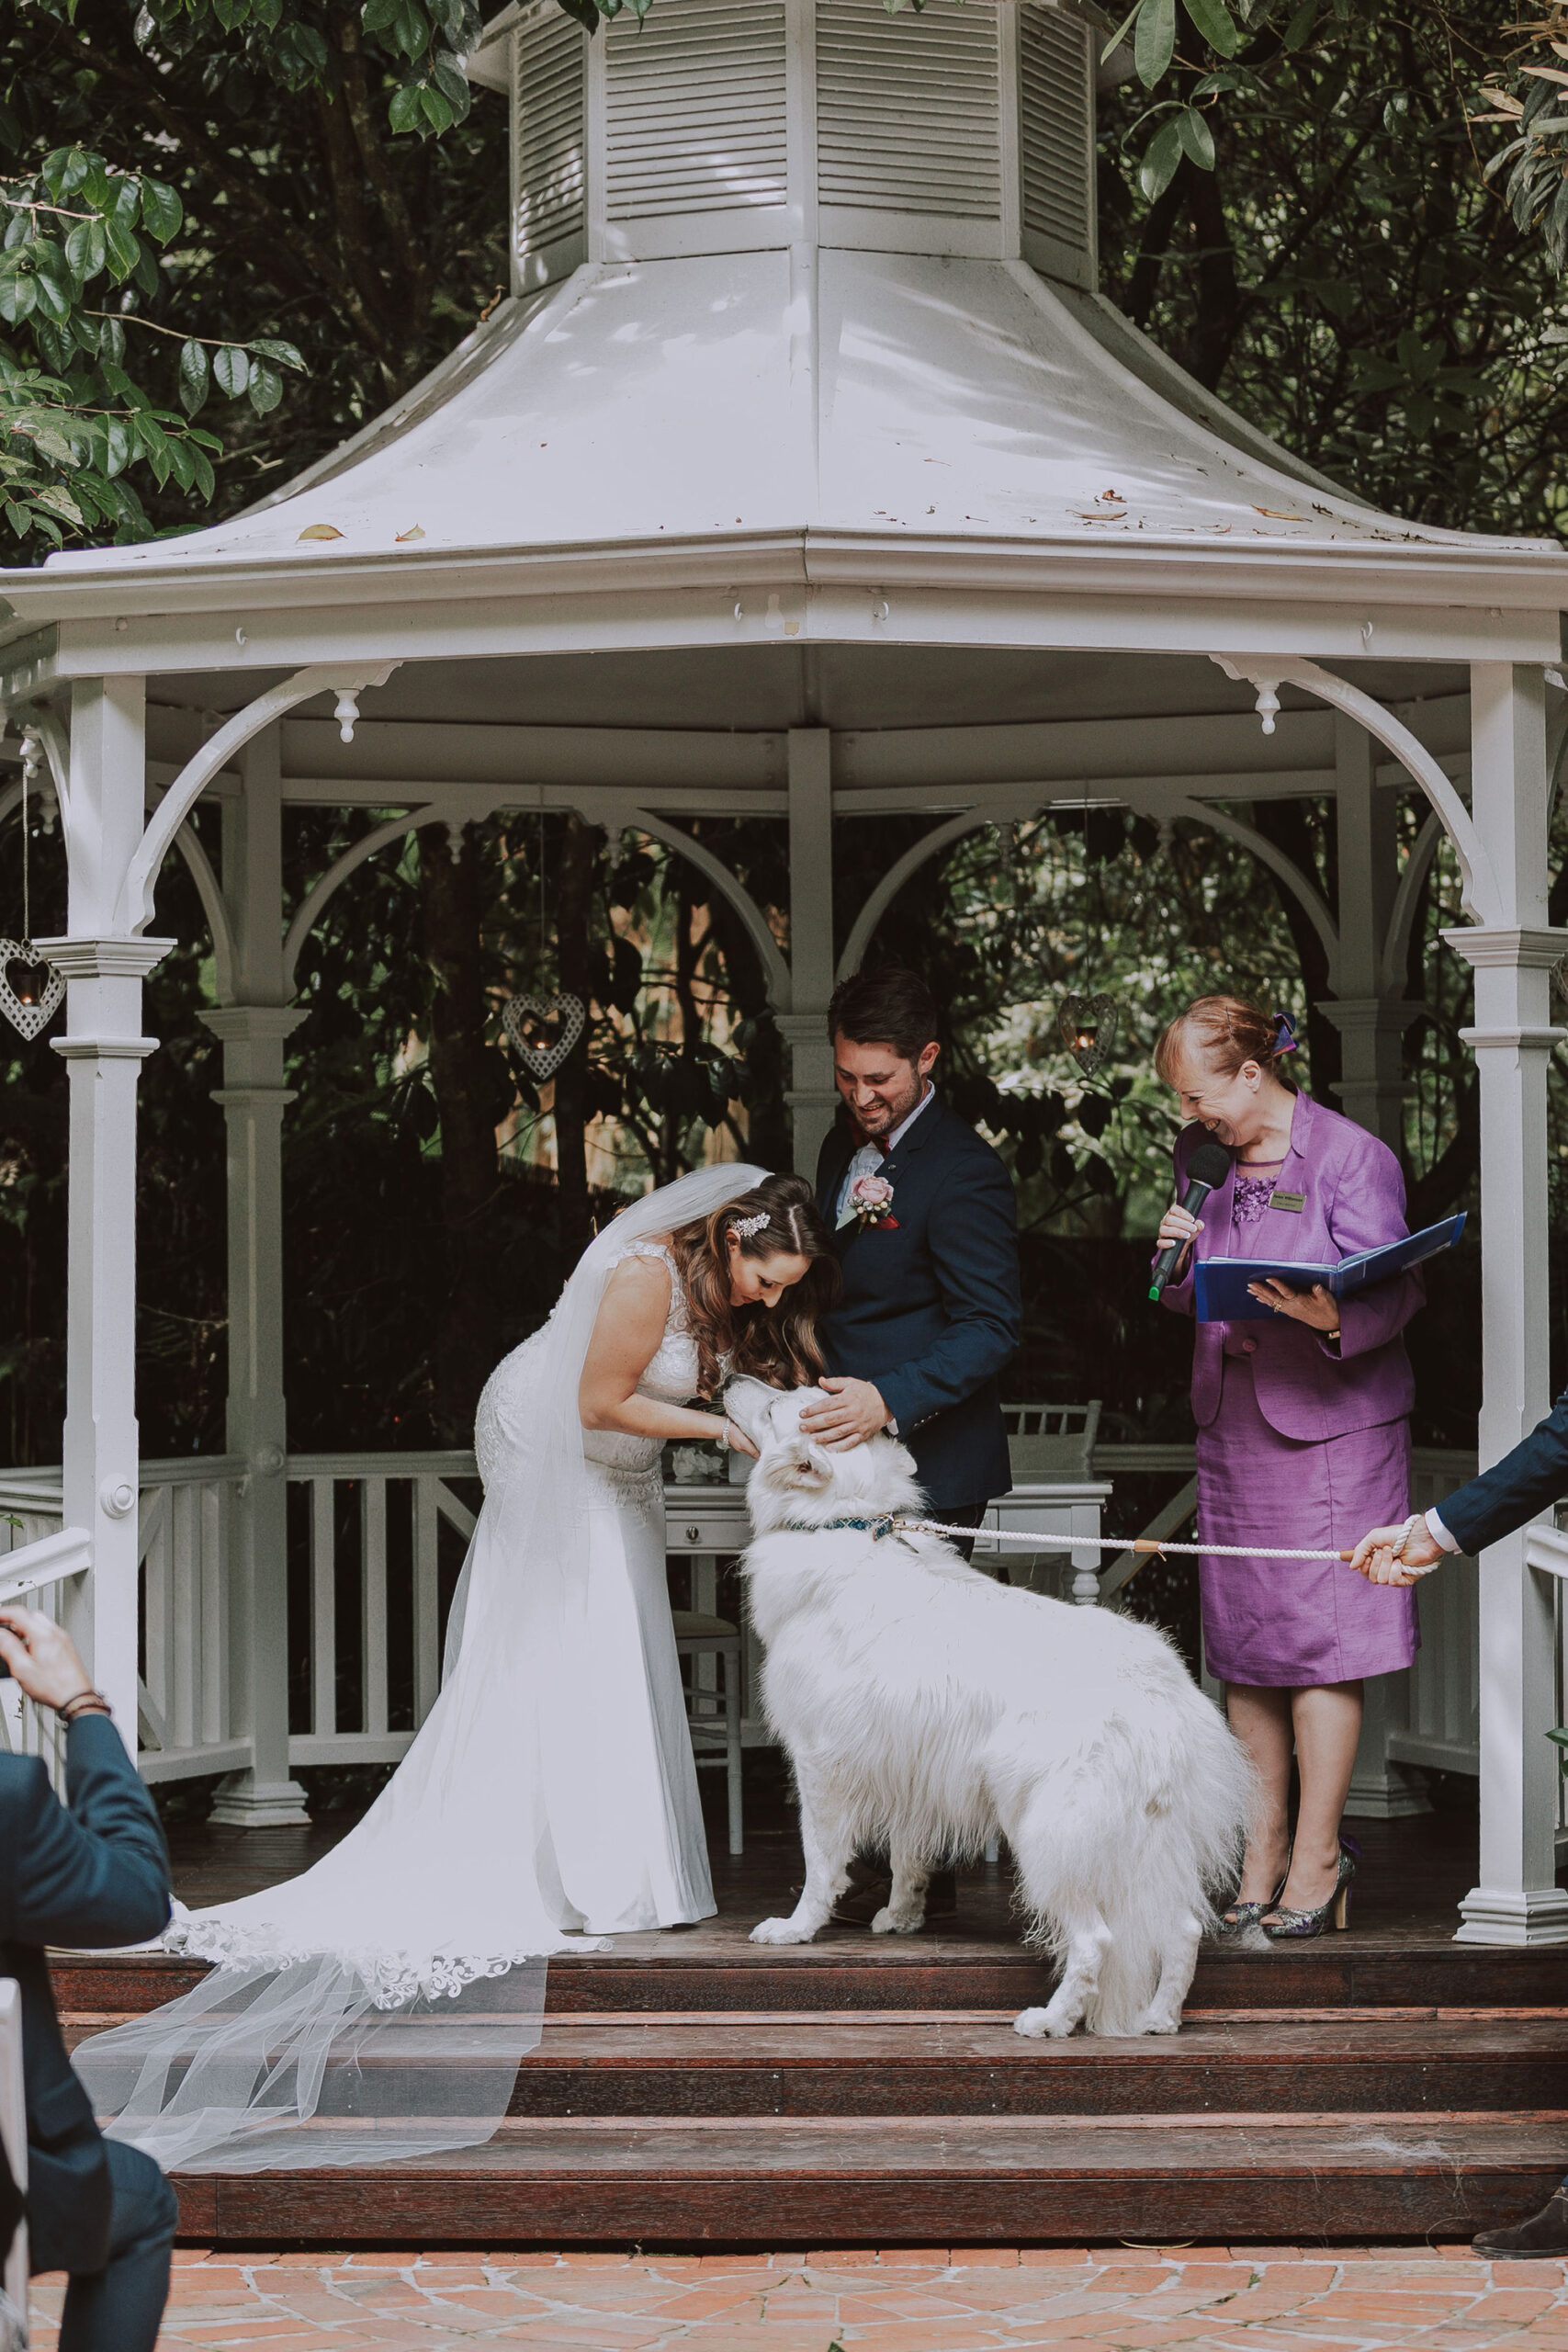 Alyssa Brody Rustic Garden Wedding Lovable Photography SBS 020 scaled